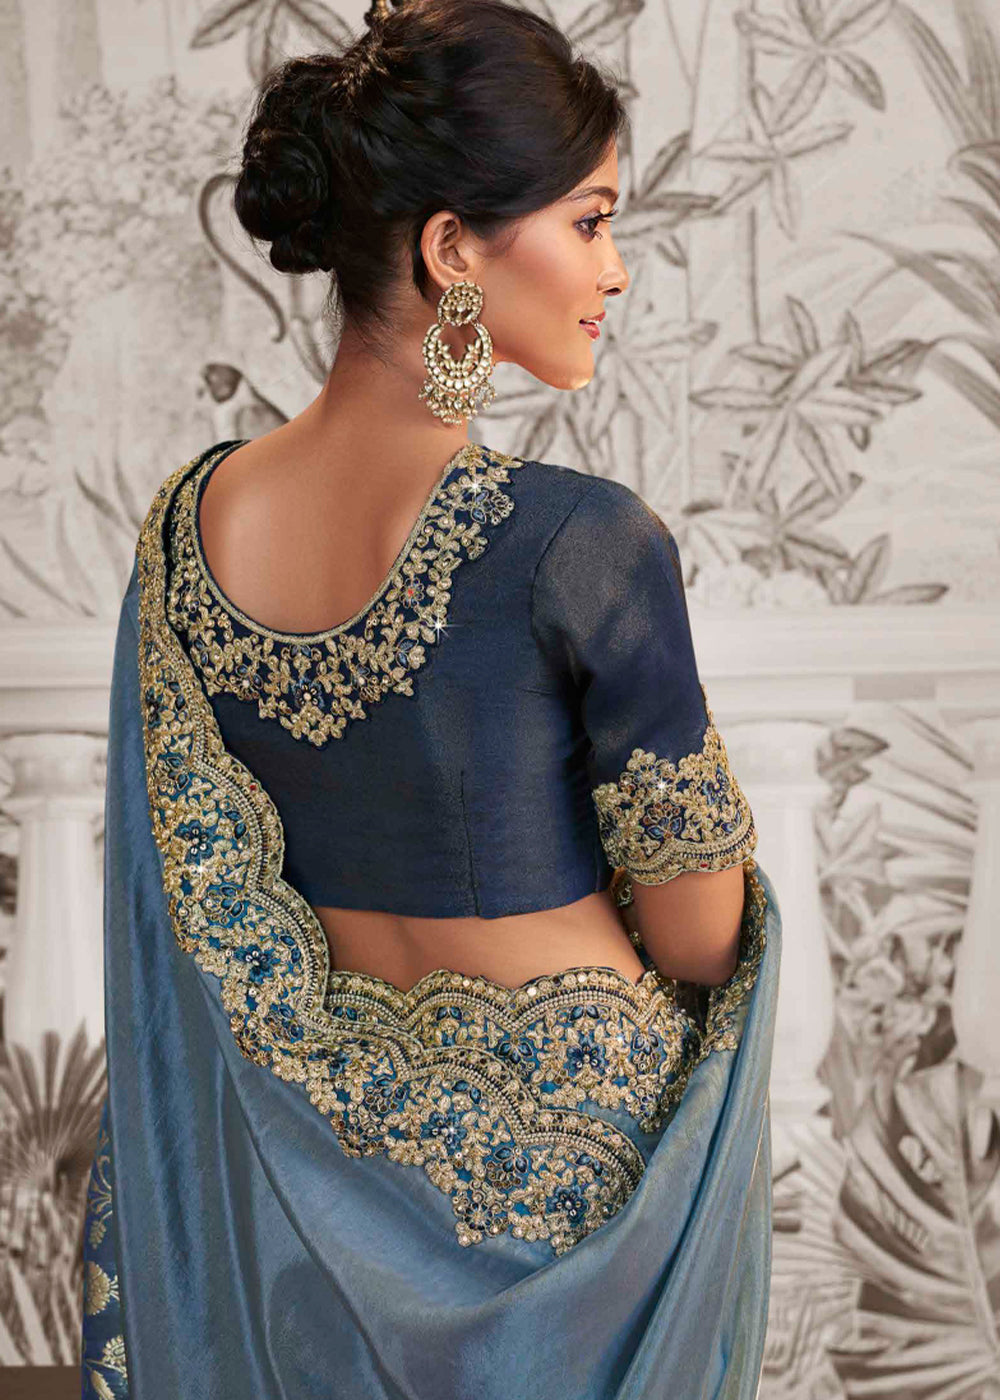 Shades Of Blue Designer Heavy Embroidered Silk Saree